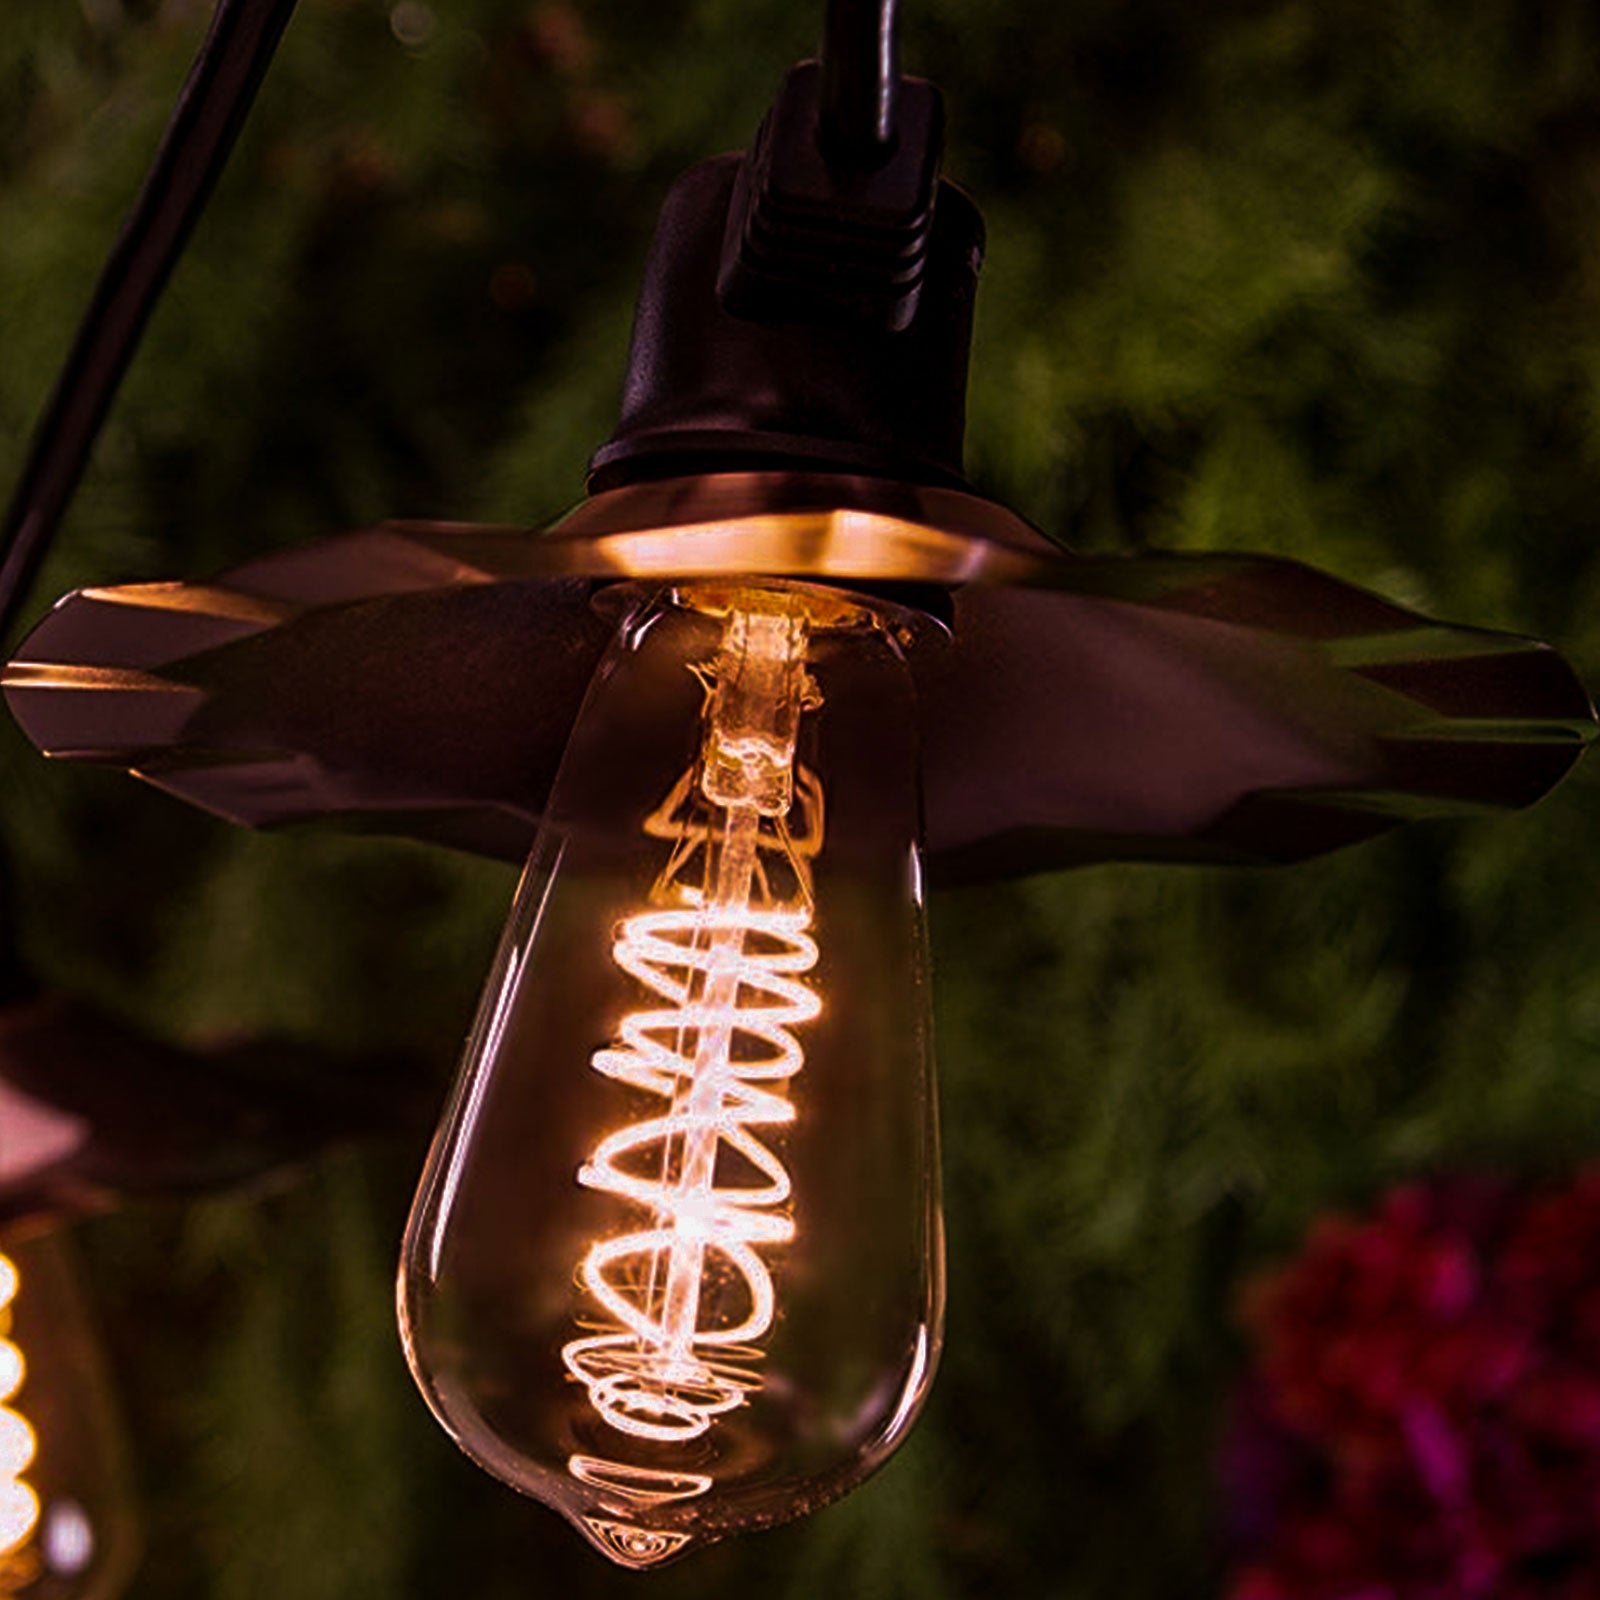 LED Filament Spiral ST64 4W=25w Extra Warm White (AMBER) ES E27 Edison Screw Decorative Bulbs